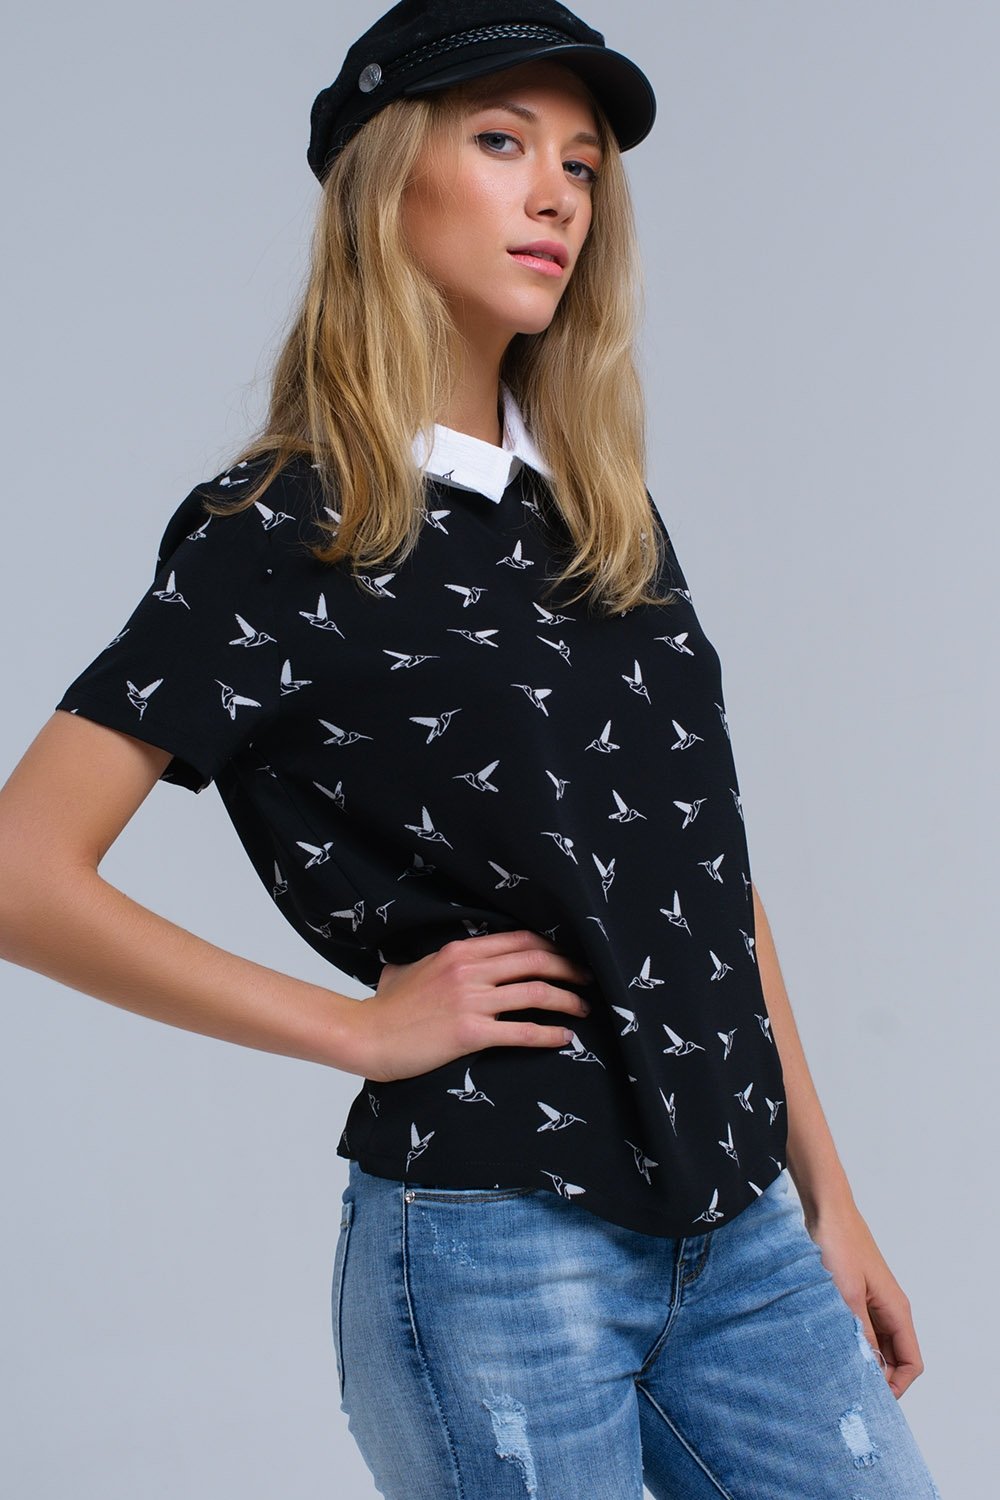 Black Shirt With White Printed Birds